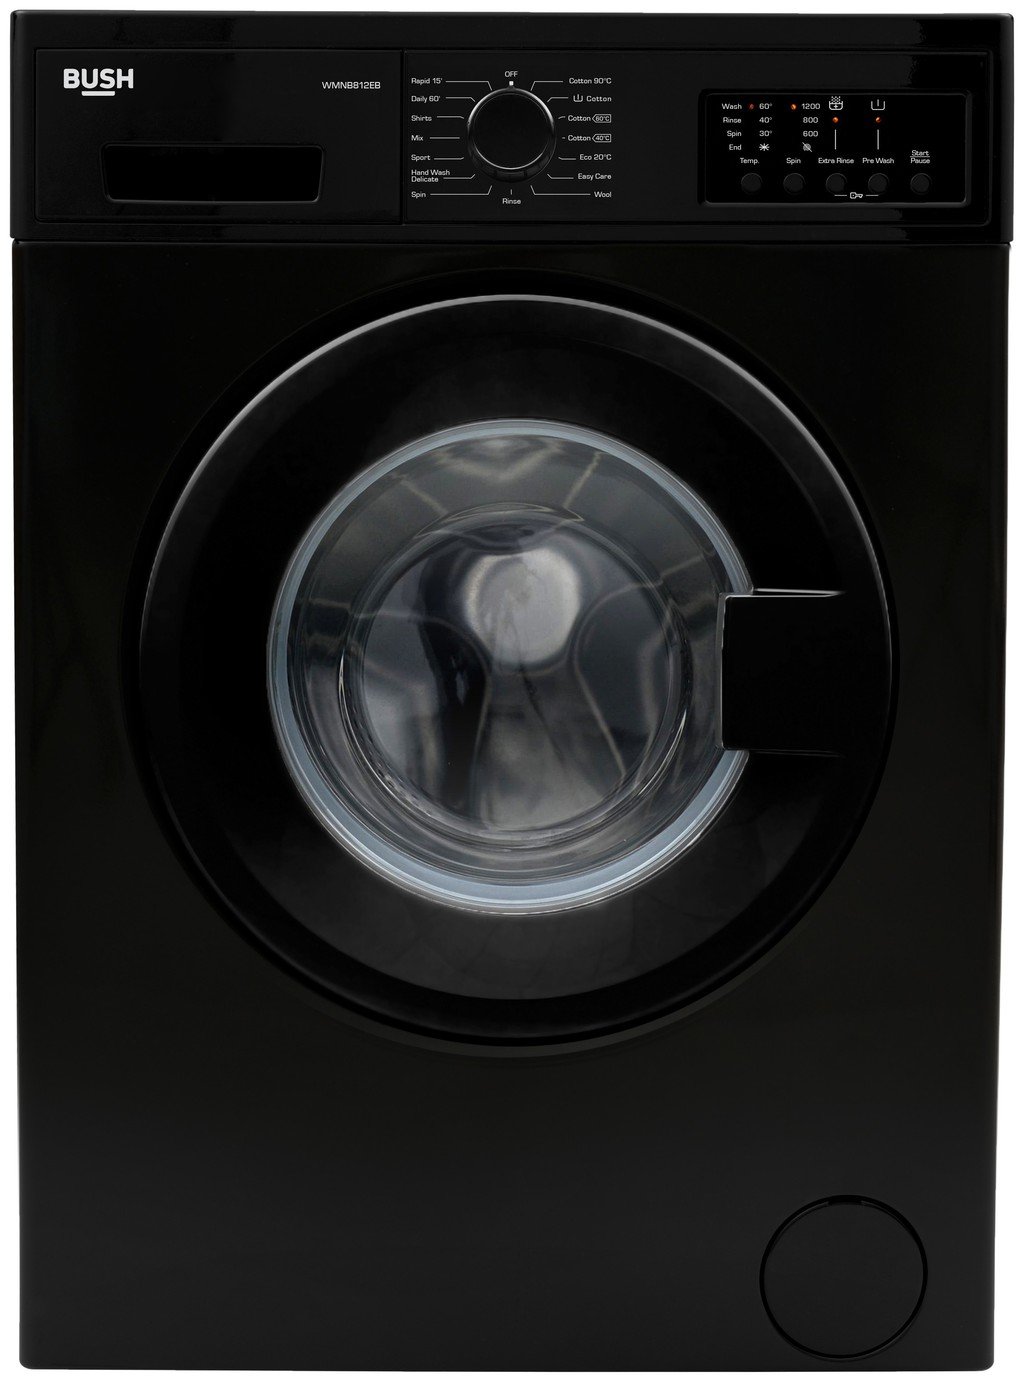 Bush WMNB812EB 8KG 1200 Spin Washing Machine - Black